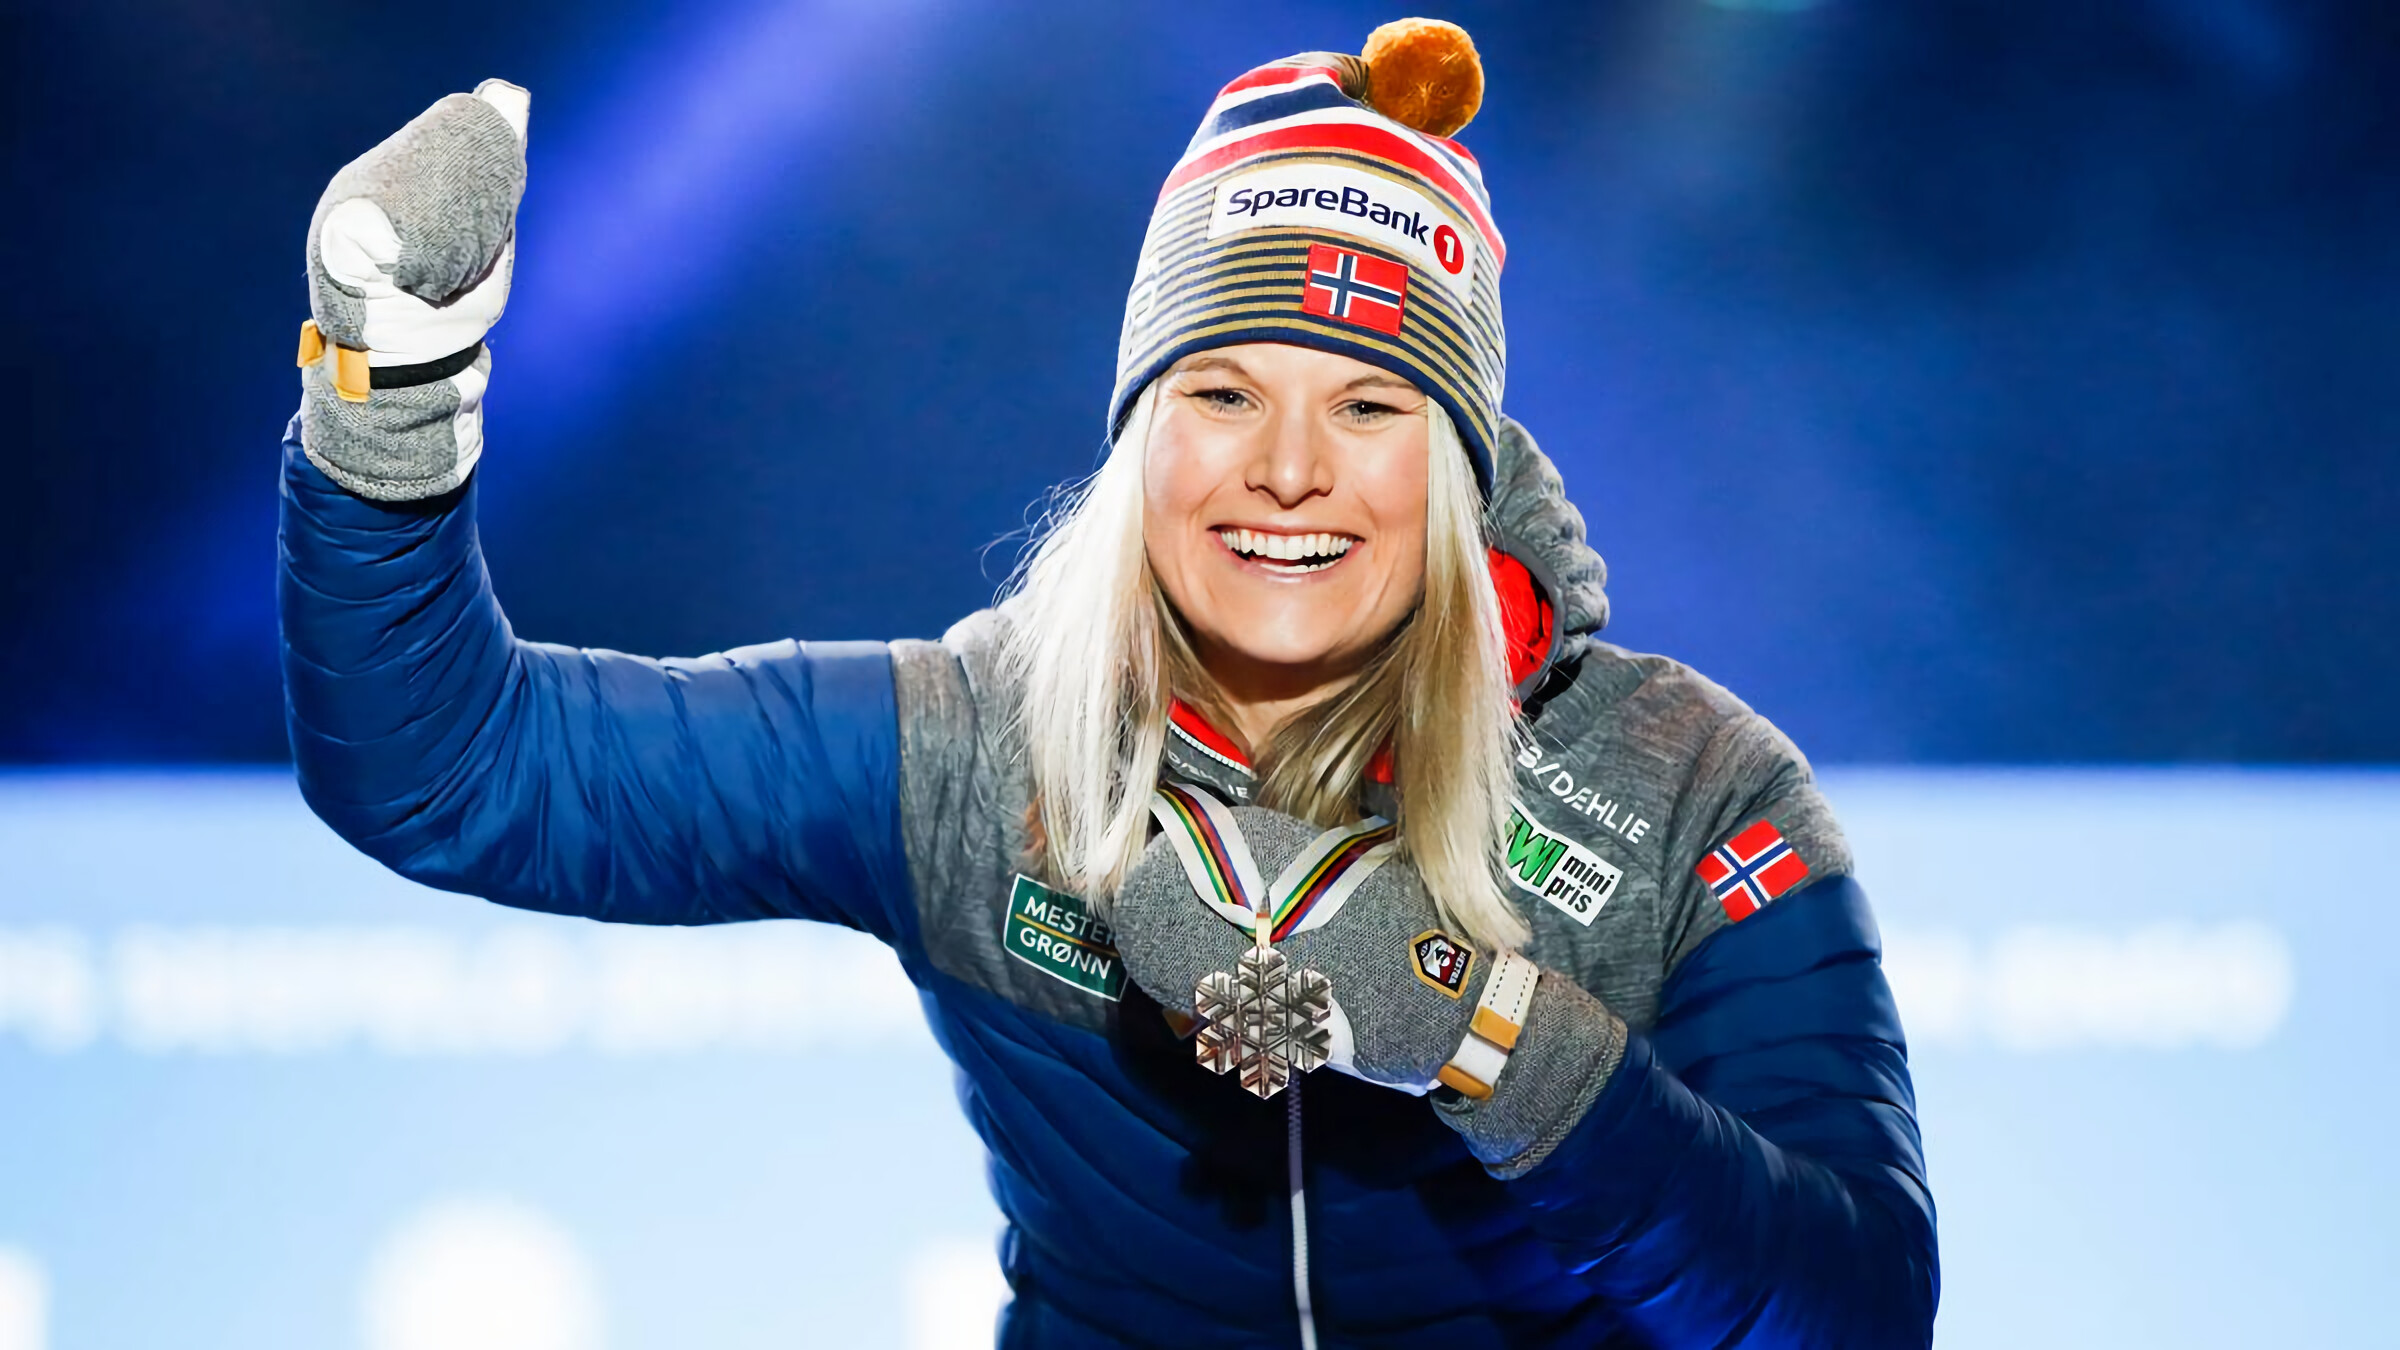 Mari Eide, Winter Olympics, Snow-covered mountains, Athlete's journey, 2400x1350 HD Desktop